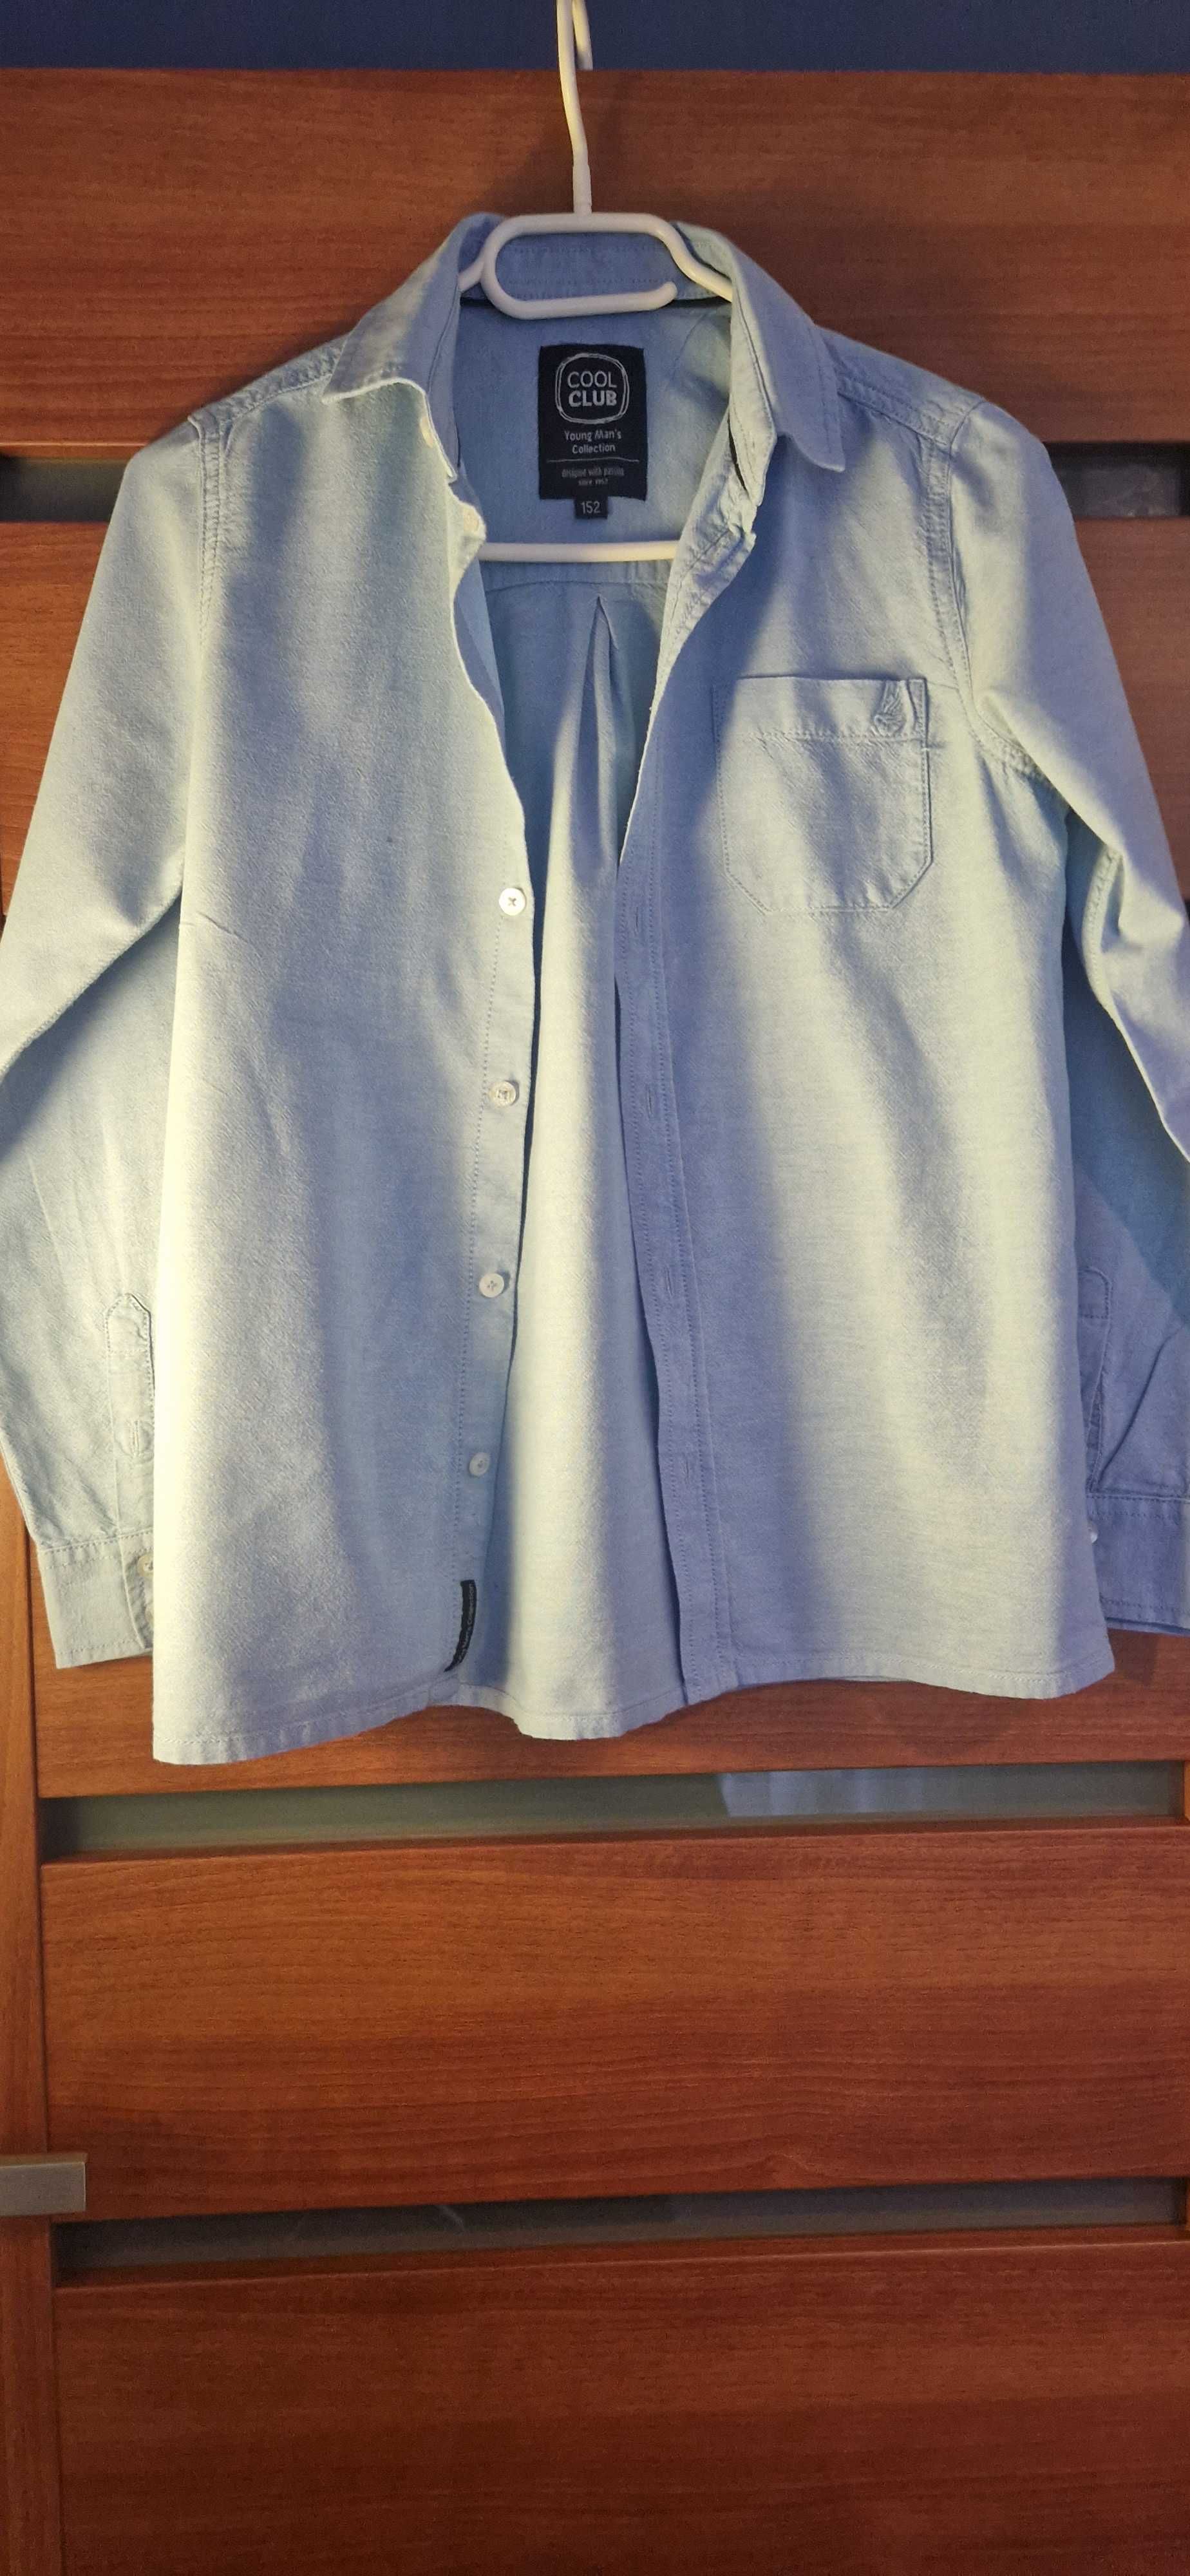 Koszula chłopięca błękitna rozmiar 152